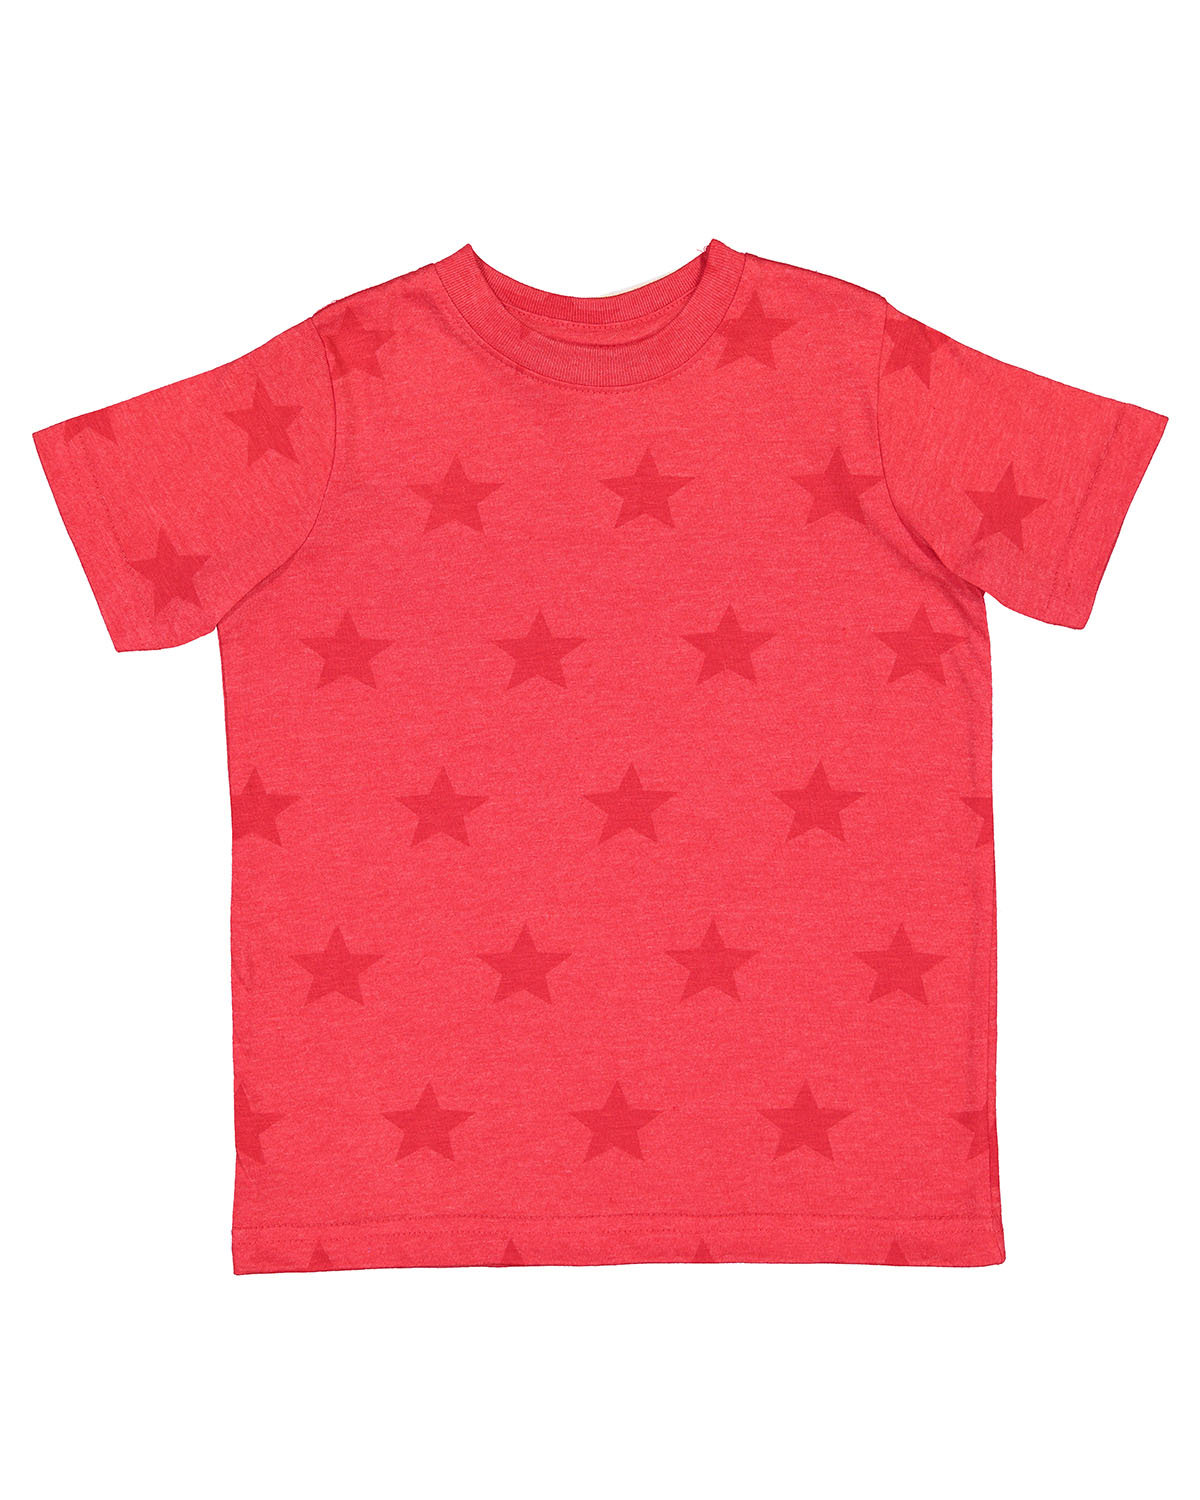 Toddler Five Star T-Shirt-